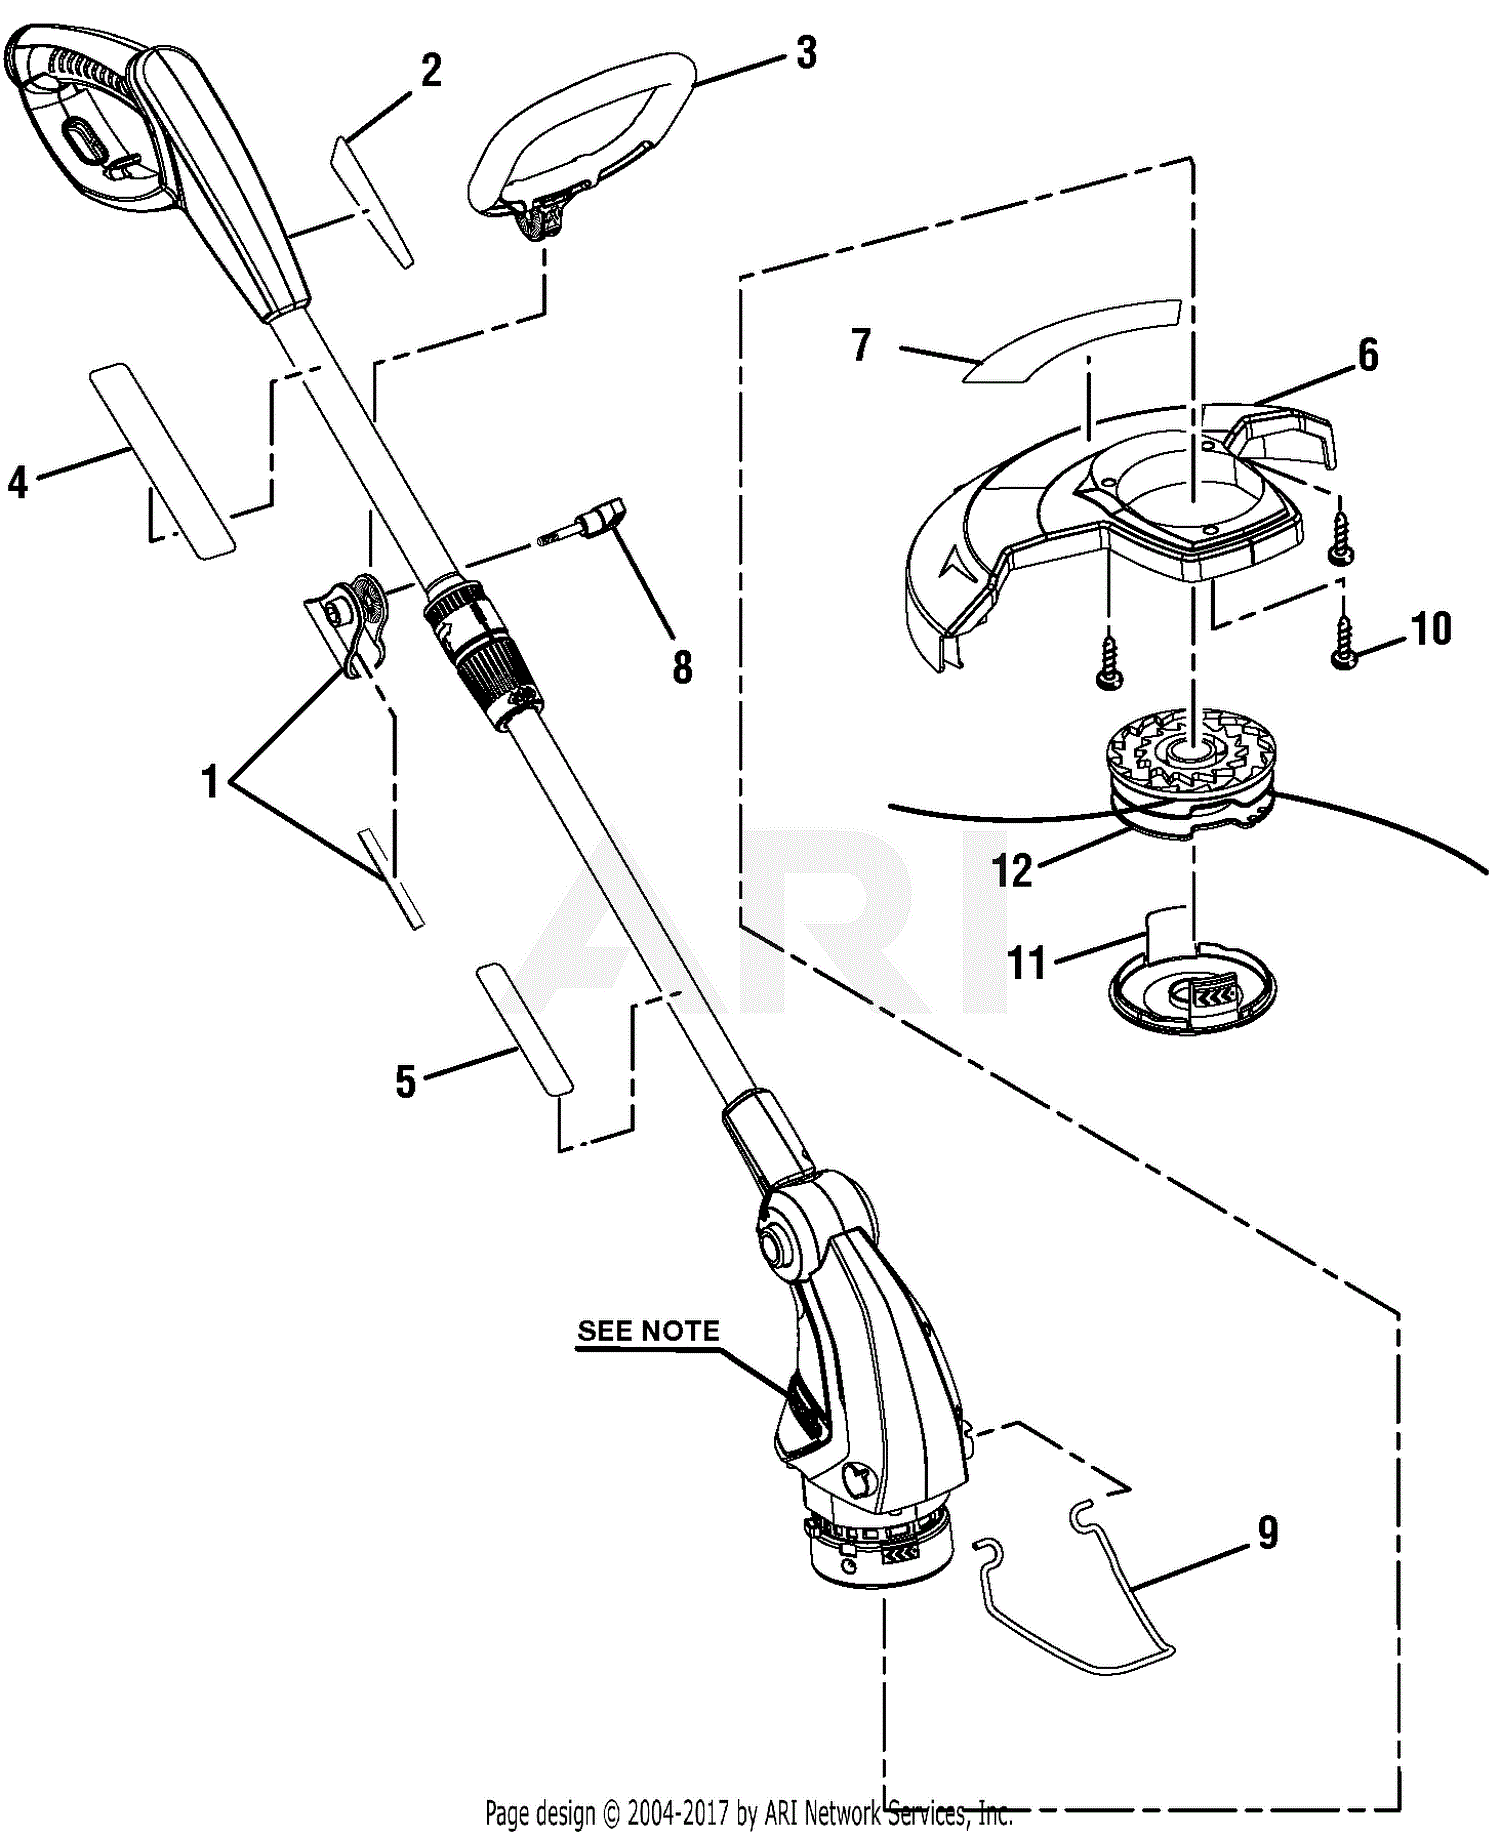 Homelite UT41122 String Trimmer/Edger Parts Diagram for General Assembly